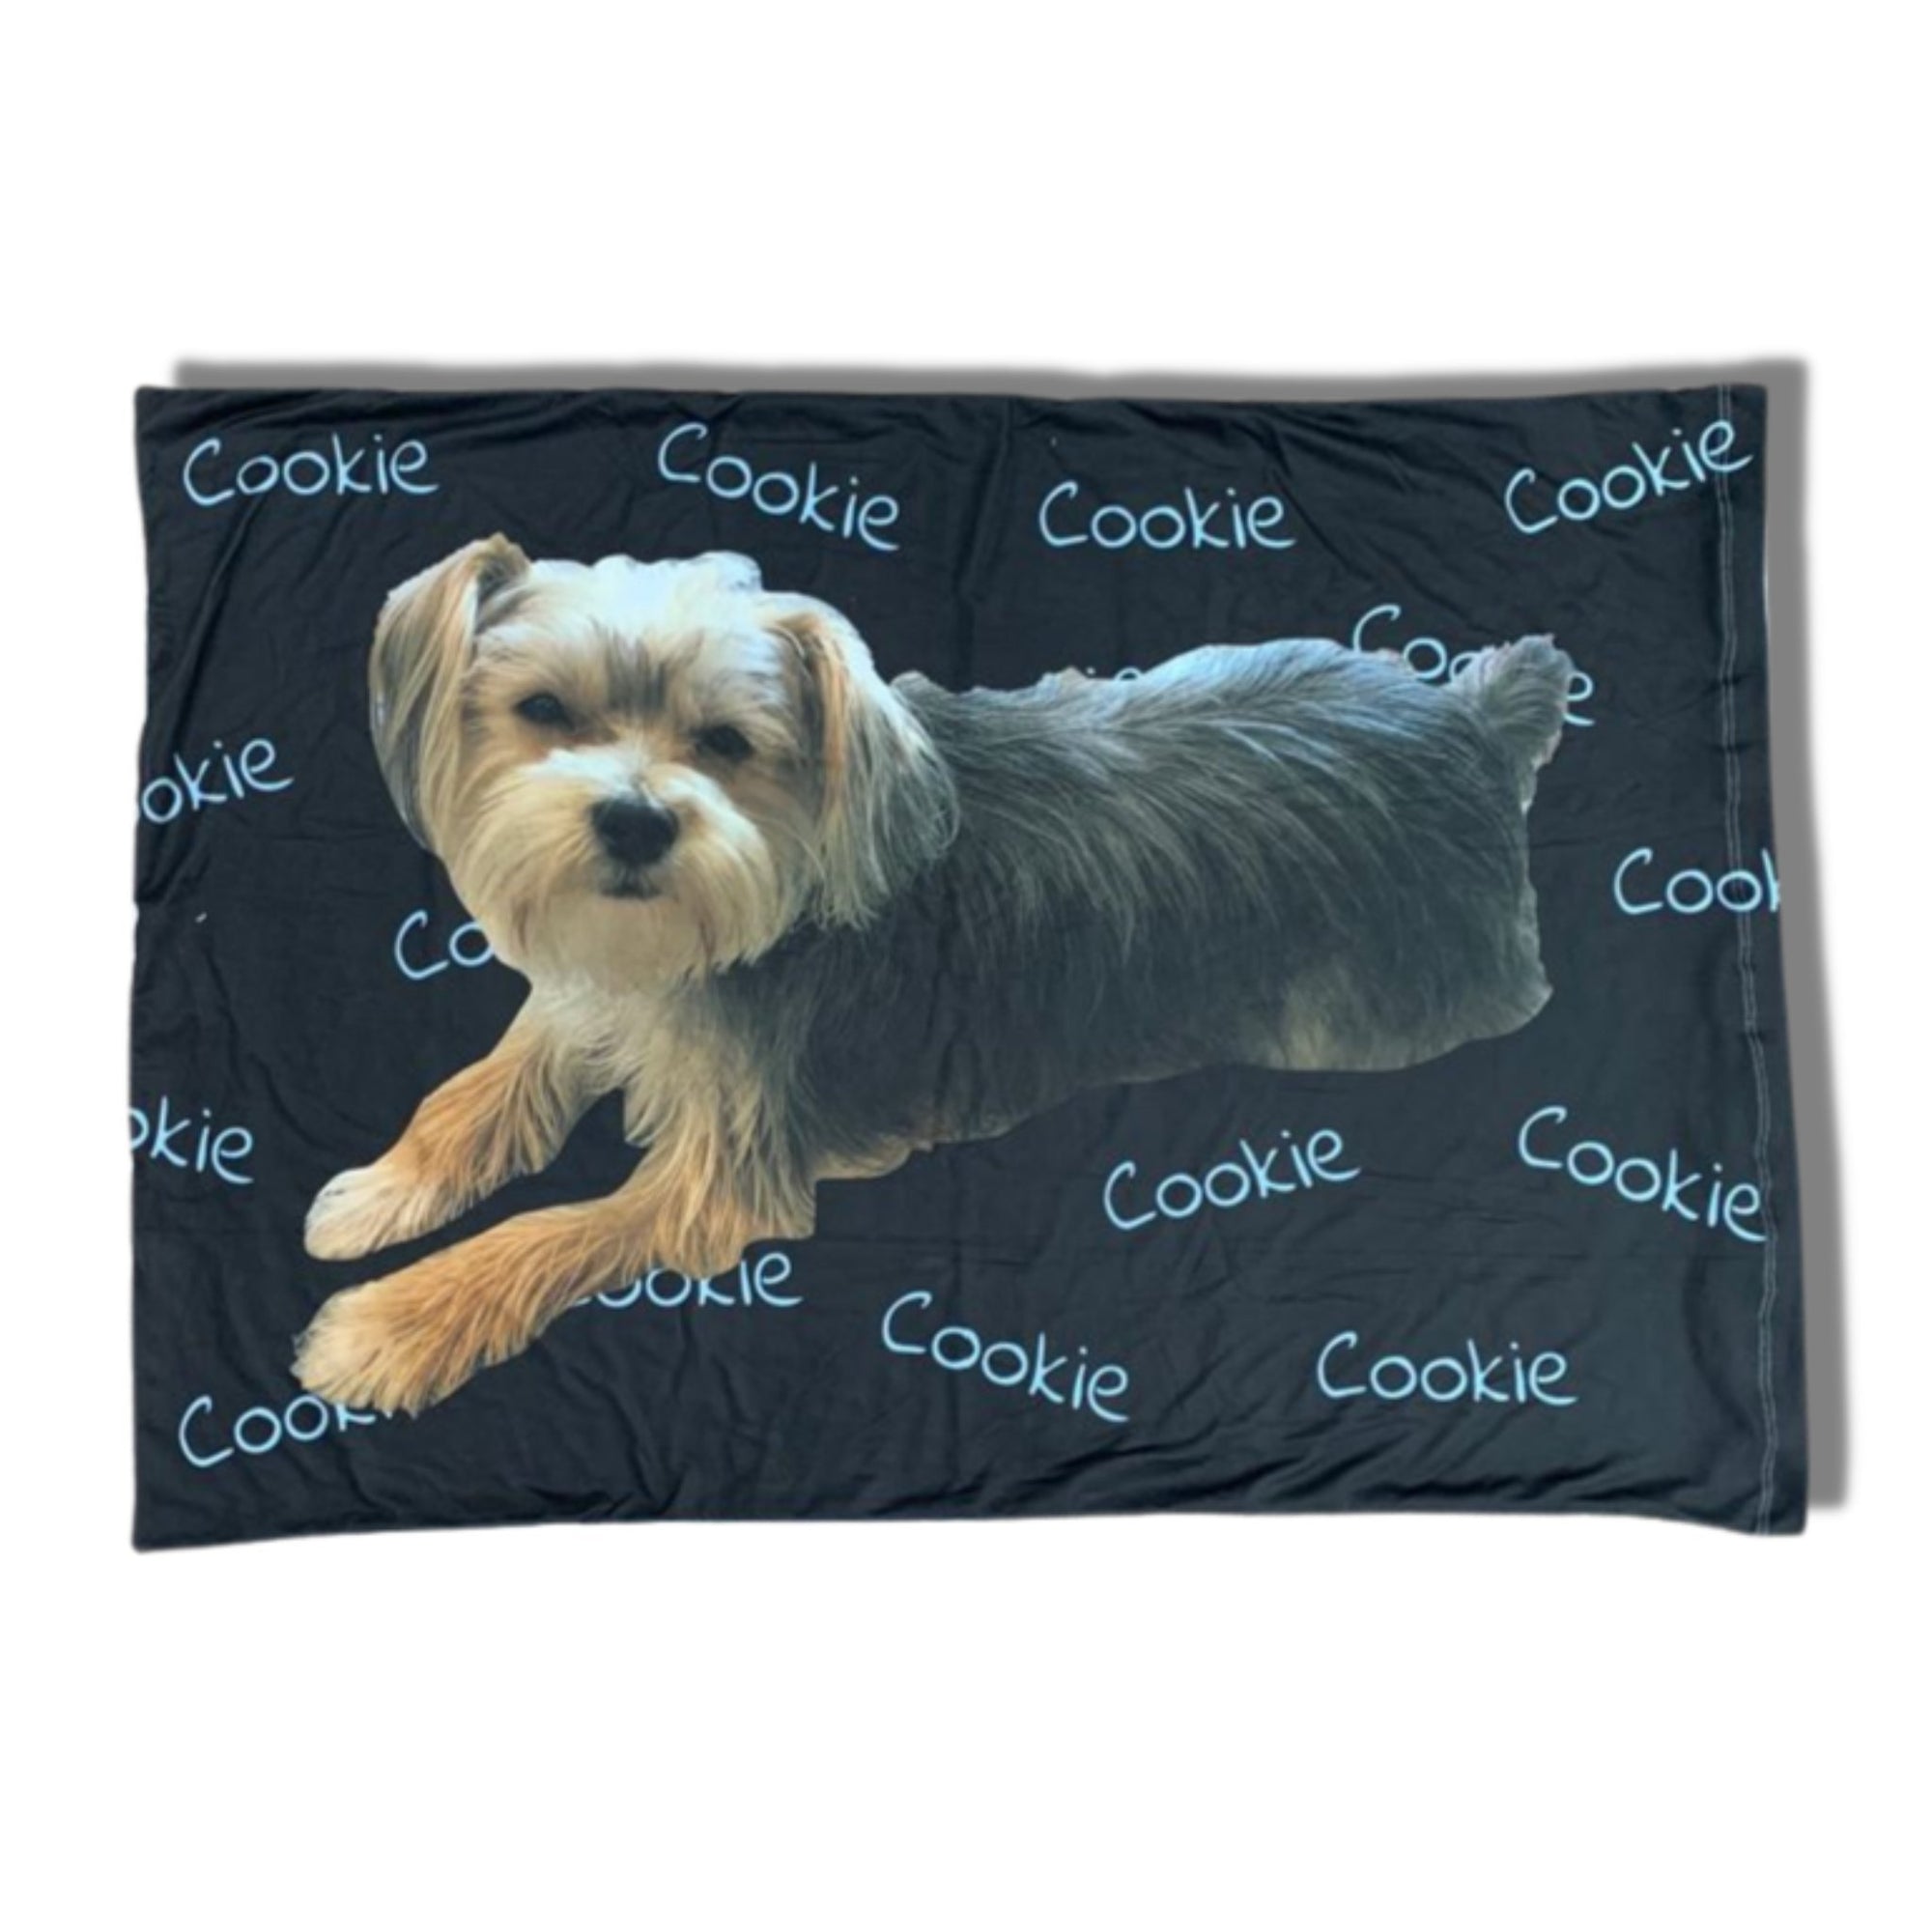 Custom Cotton Dog Pillow Cases - a Spirit Animal - Dog Pillow Cases $60-$75 dog Dog Pillow Cases